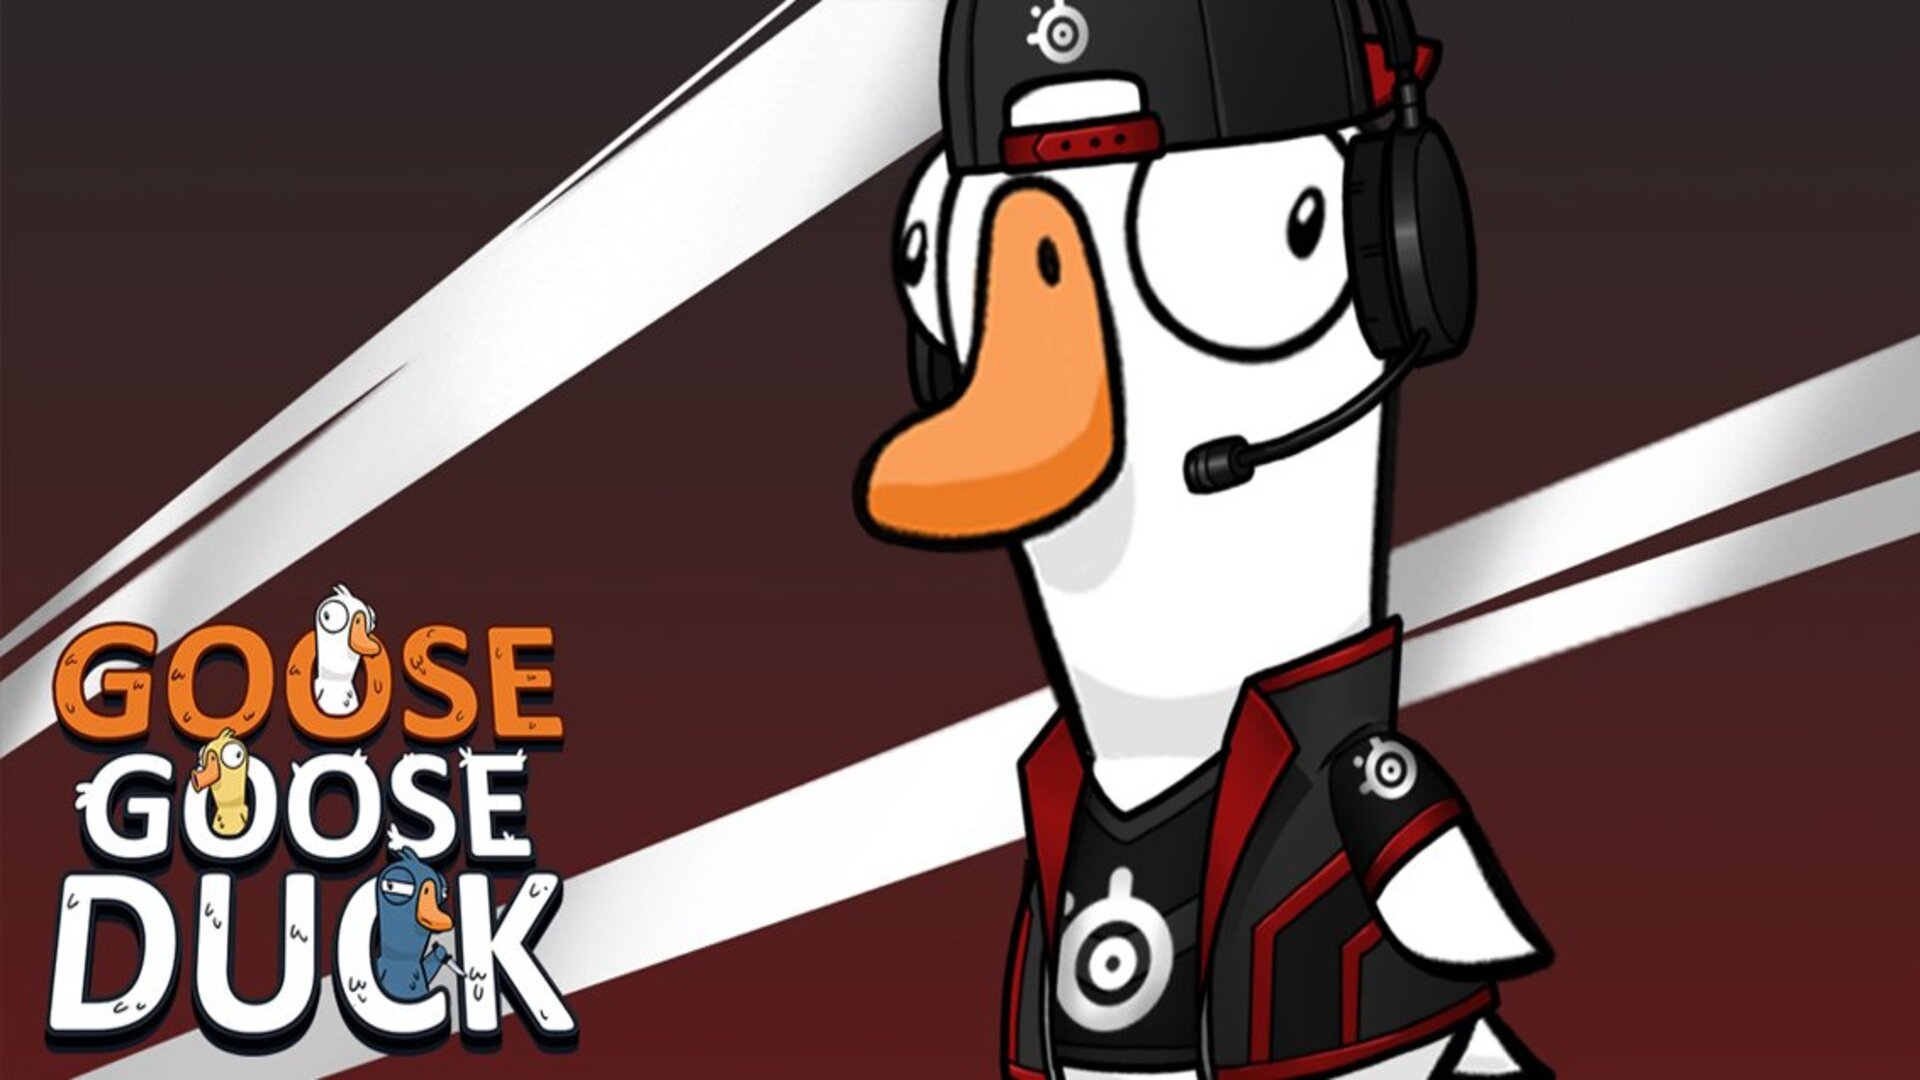 [$ 3.79] Goose Goose Duck - Steelseries Outfit Pack Digital Download CD Key